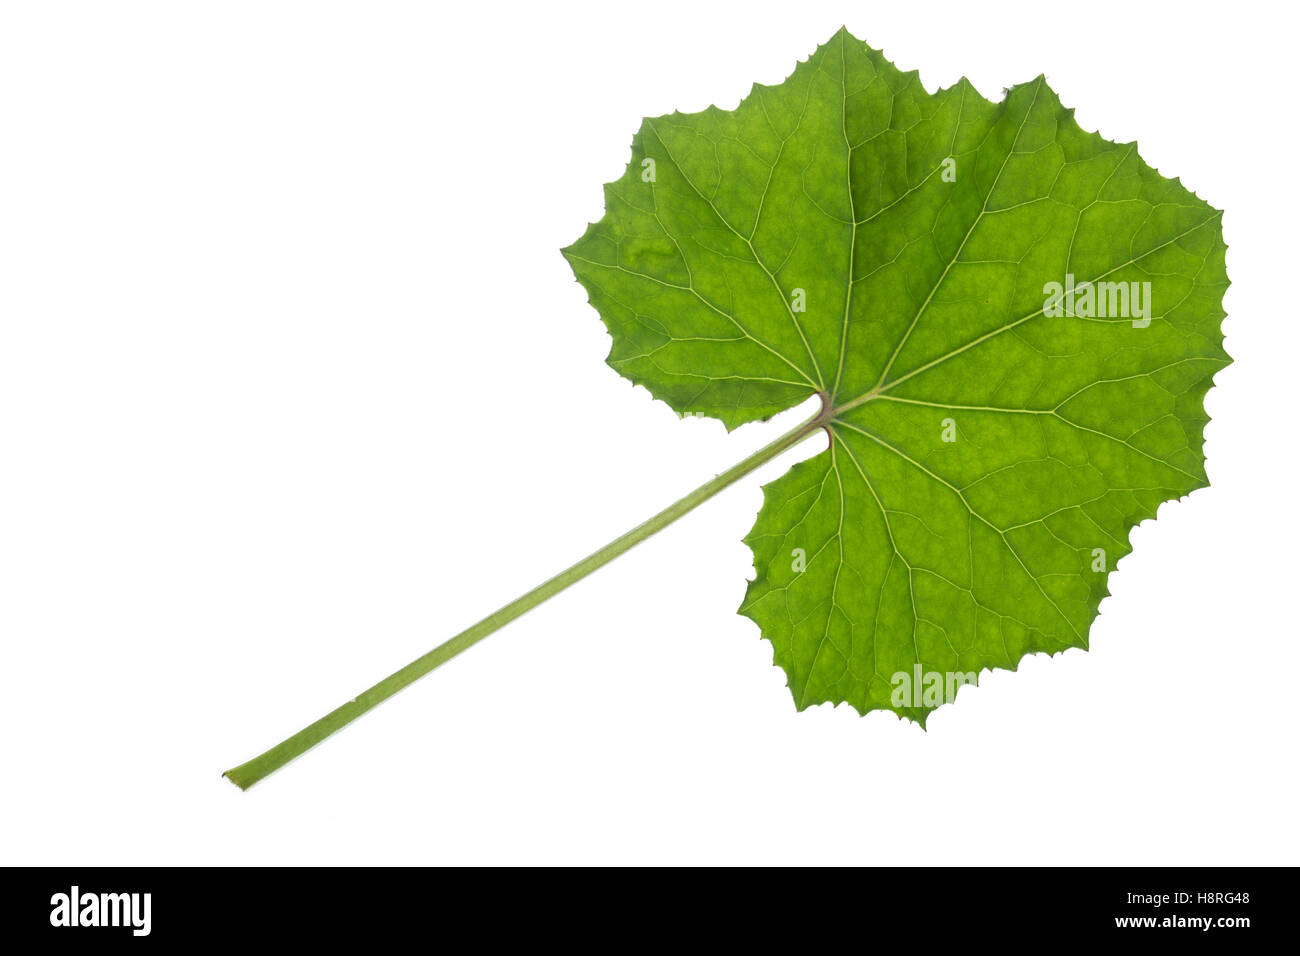 Huflattich-Blatt, Huflattich, Tussilago farfara, Coltsfoot, Pas d´âne, Tussilage. Blatt, Blätter, leaf, leaves Stock Photo